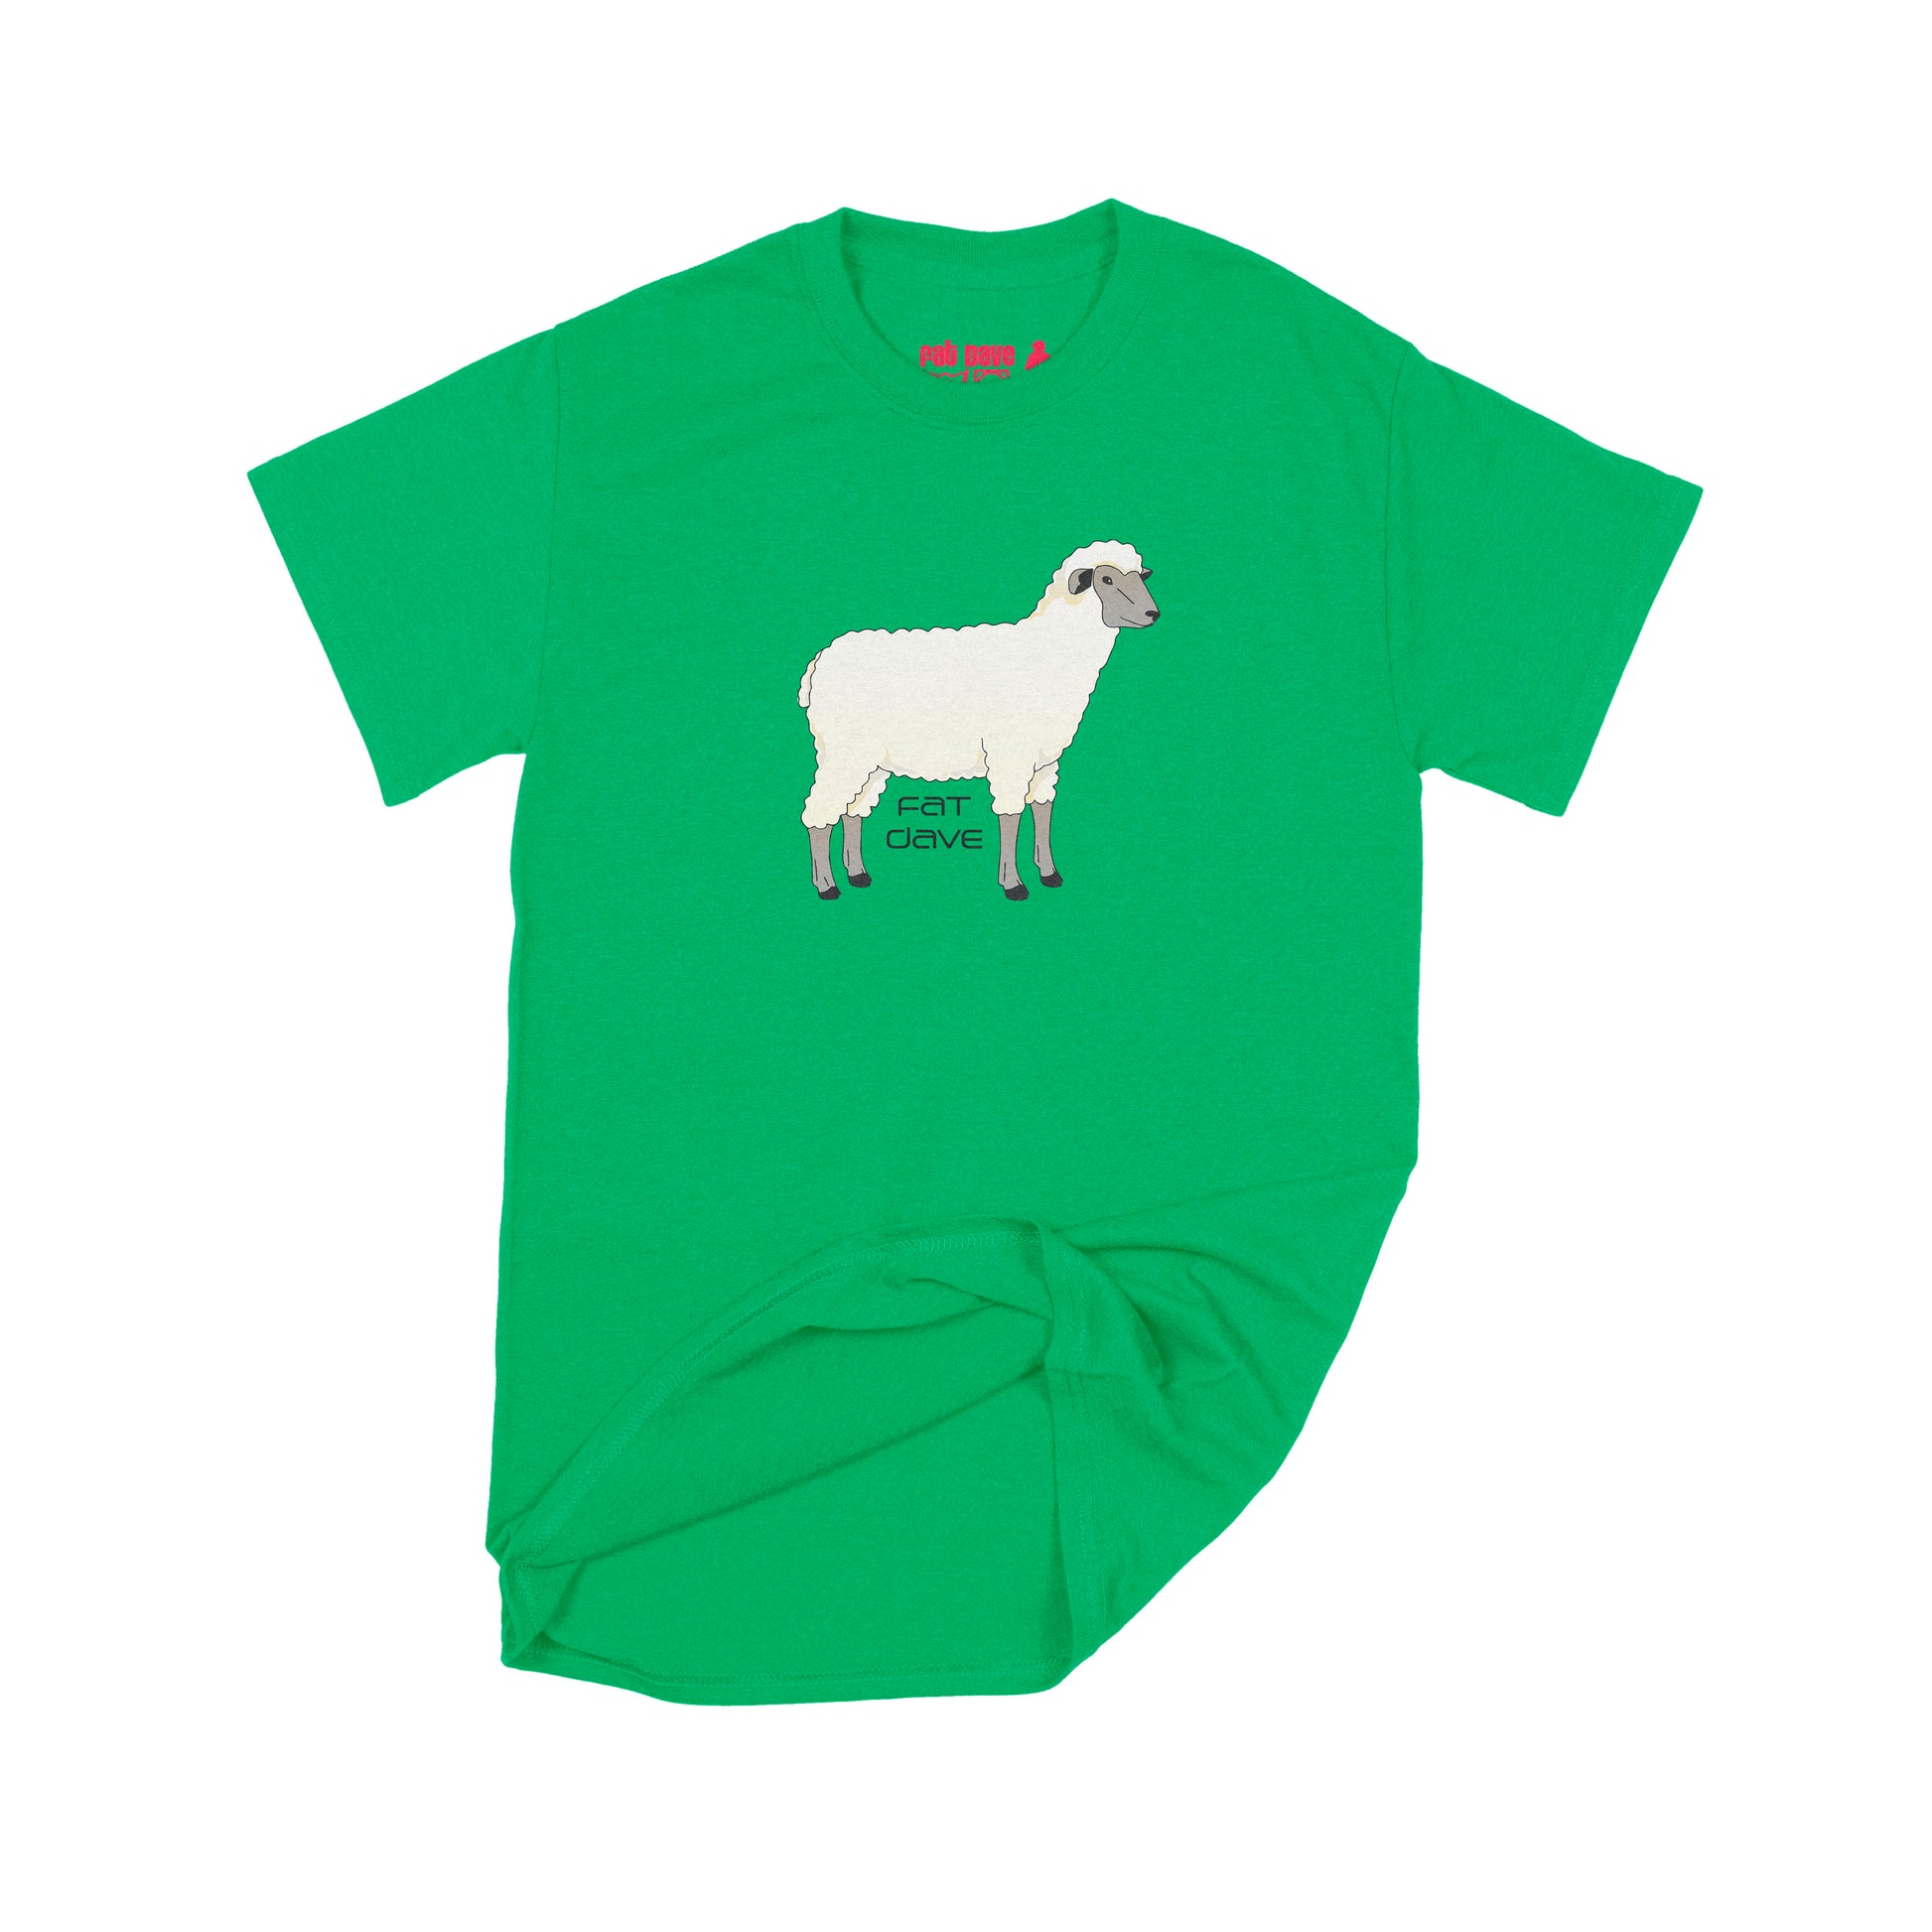 Brantford, Business, Fat Dave, Sheep, T-Shirt, Irish Green